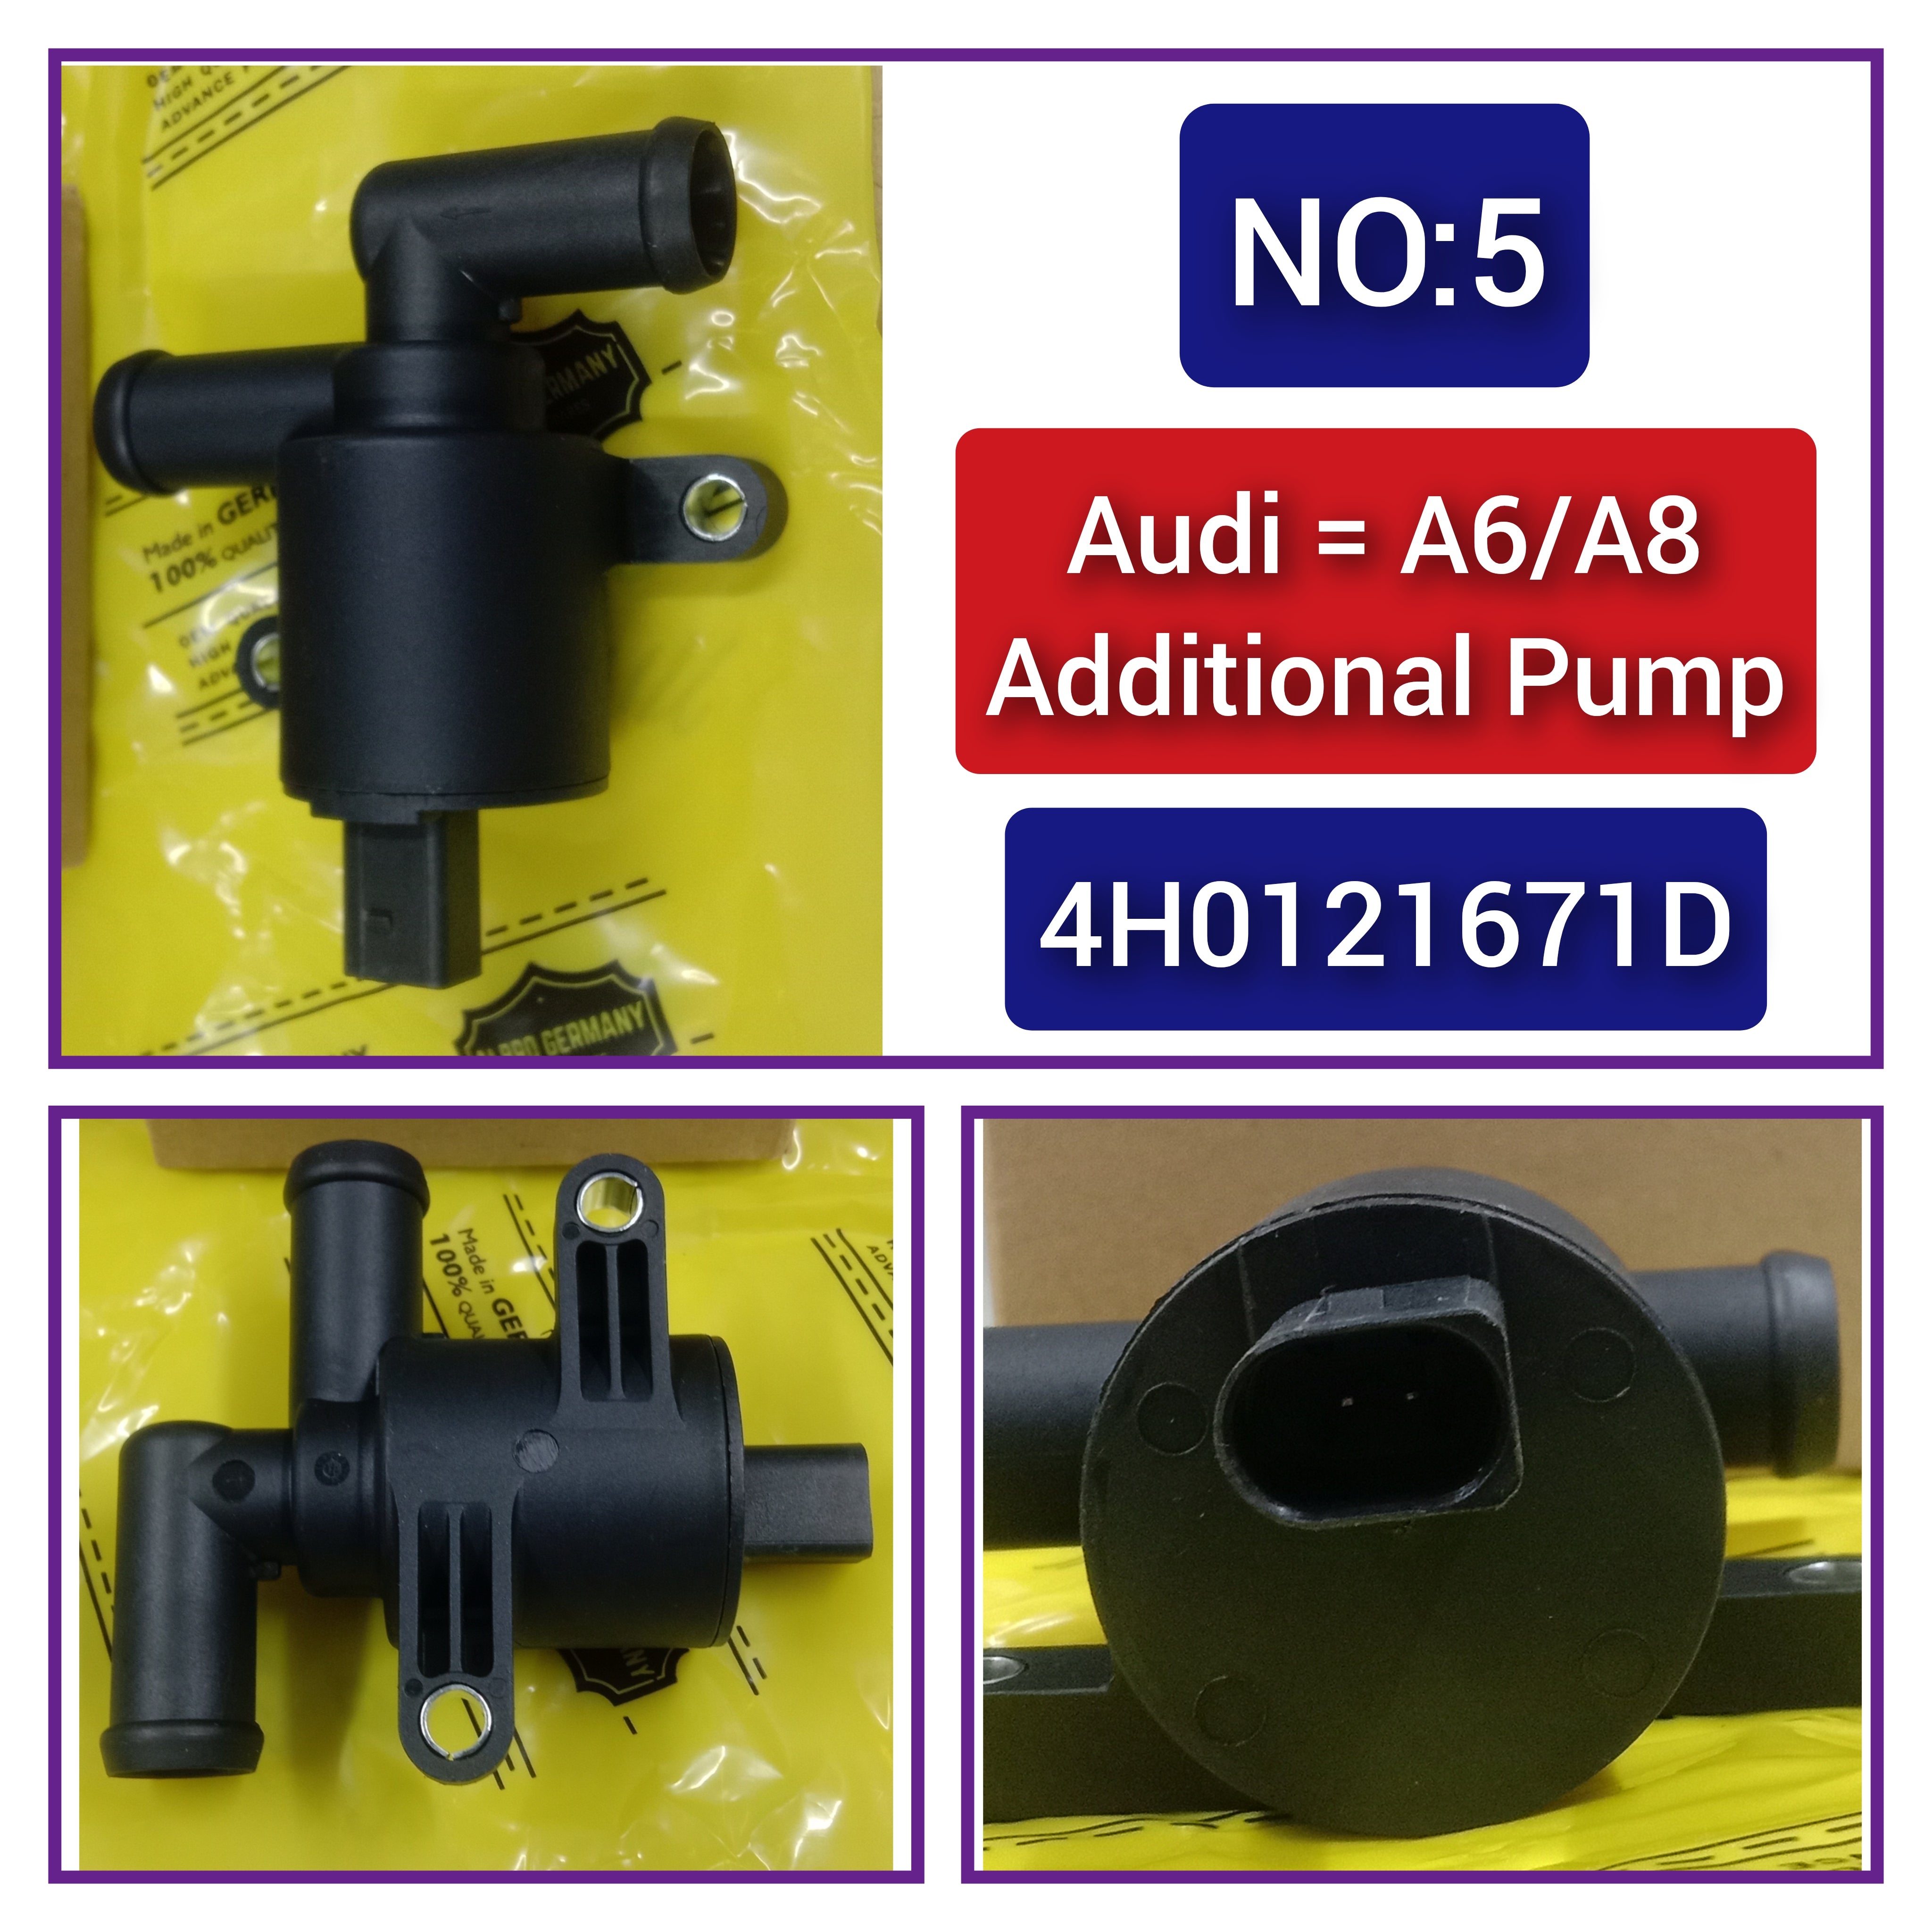 Additional Pump (Heater Control Valve) 4H0121671D For AUDI A3 A4 A6 A8 Q3 Q5 Q7 Tag-A-05